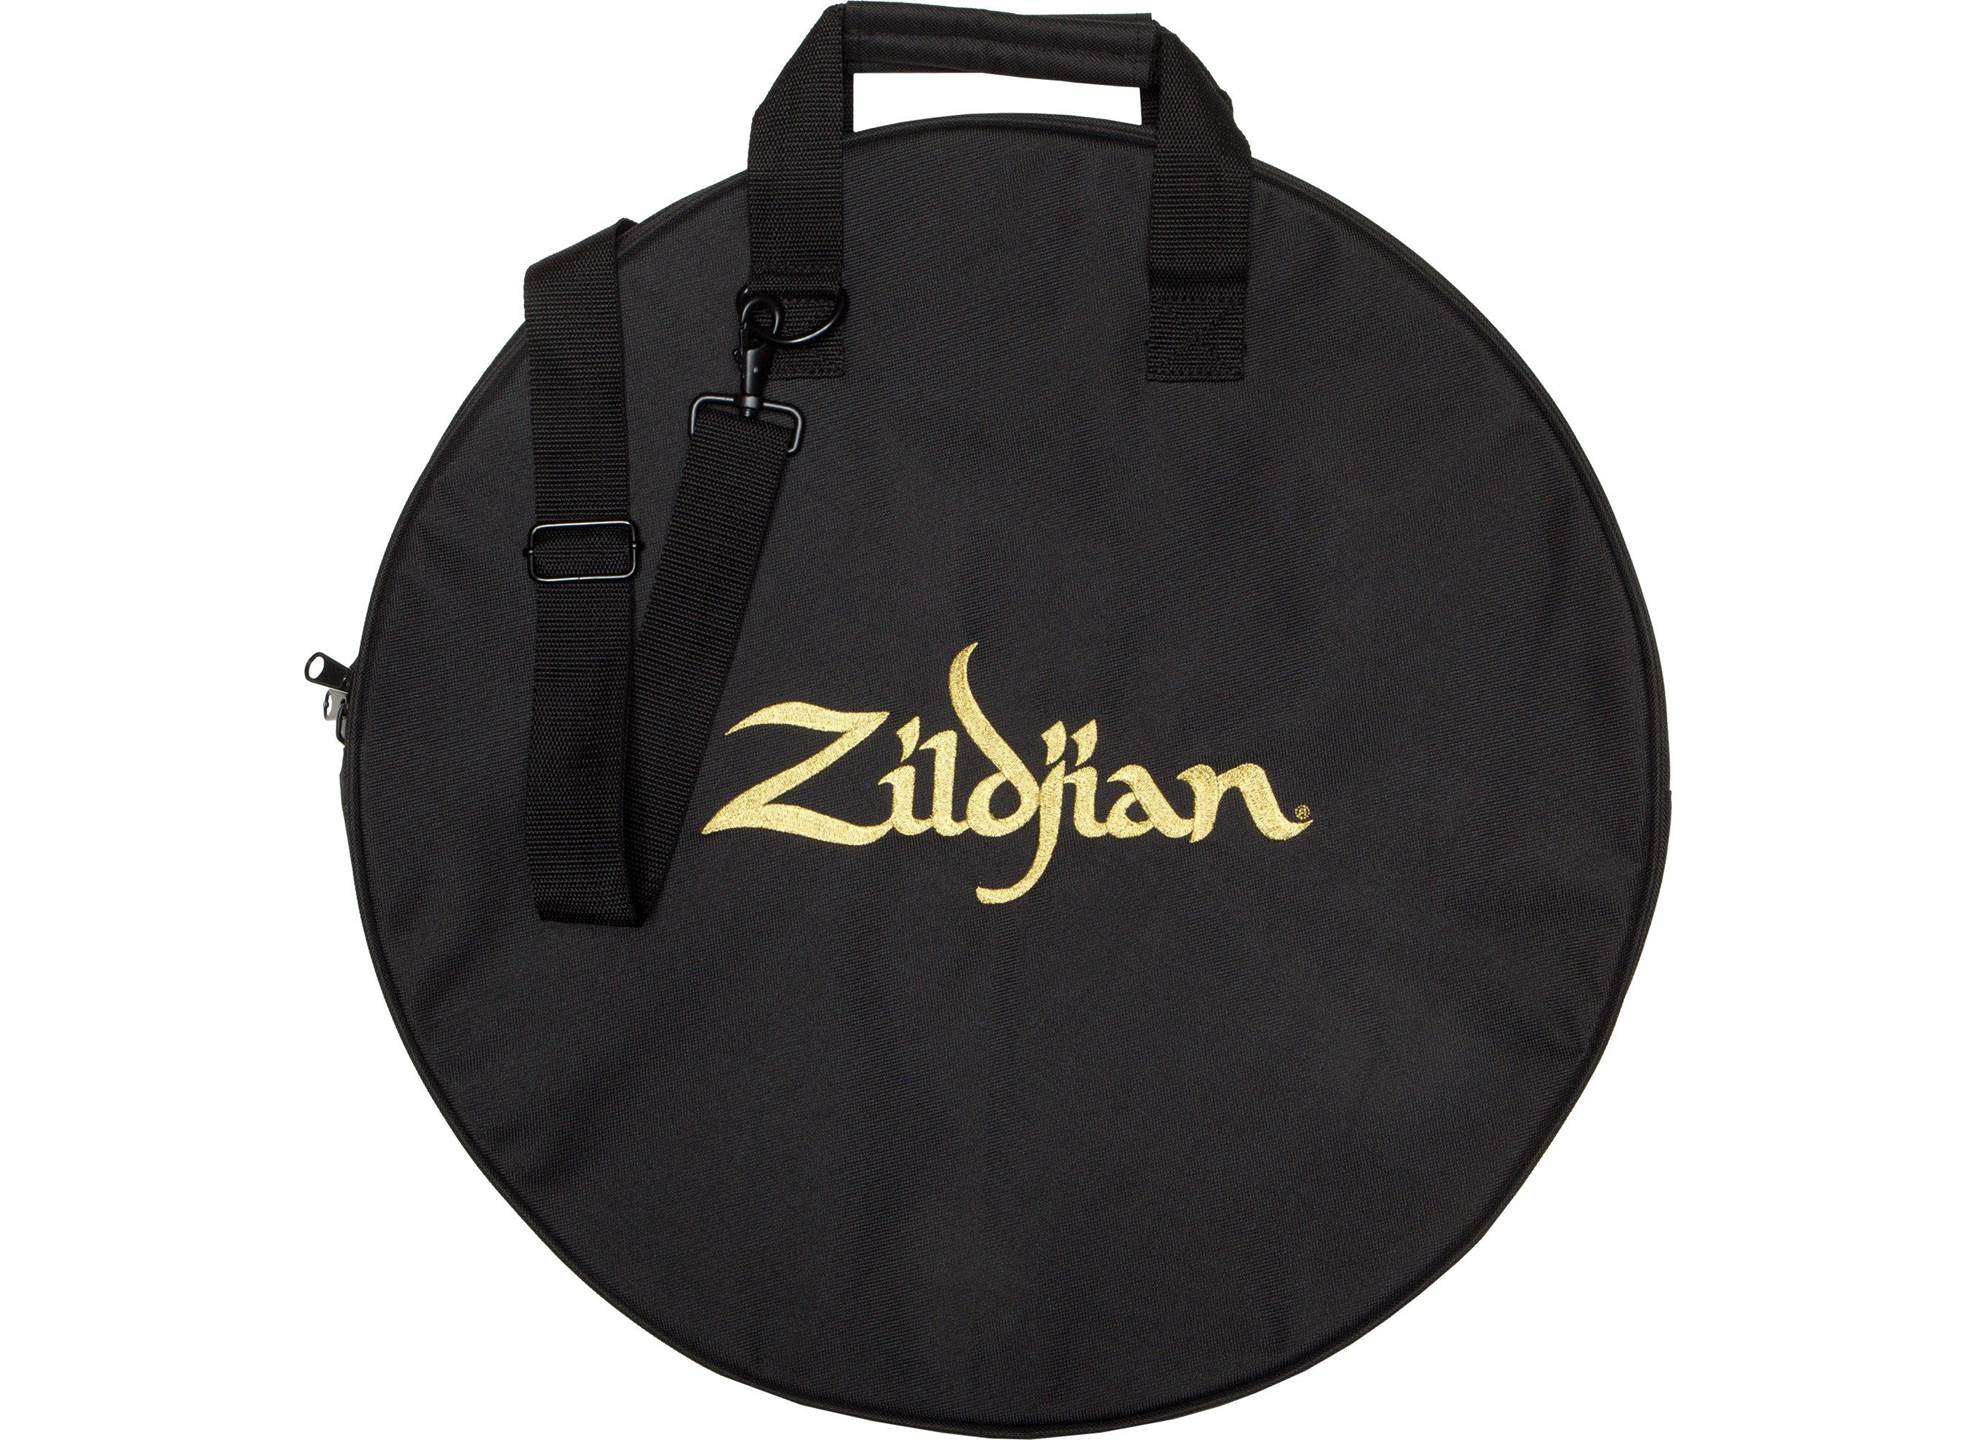 ZCB20 Basic Cymbal Bag 20 tum